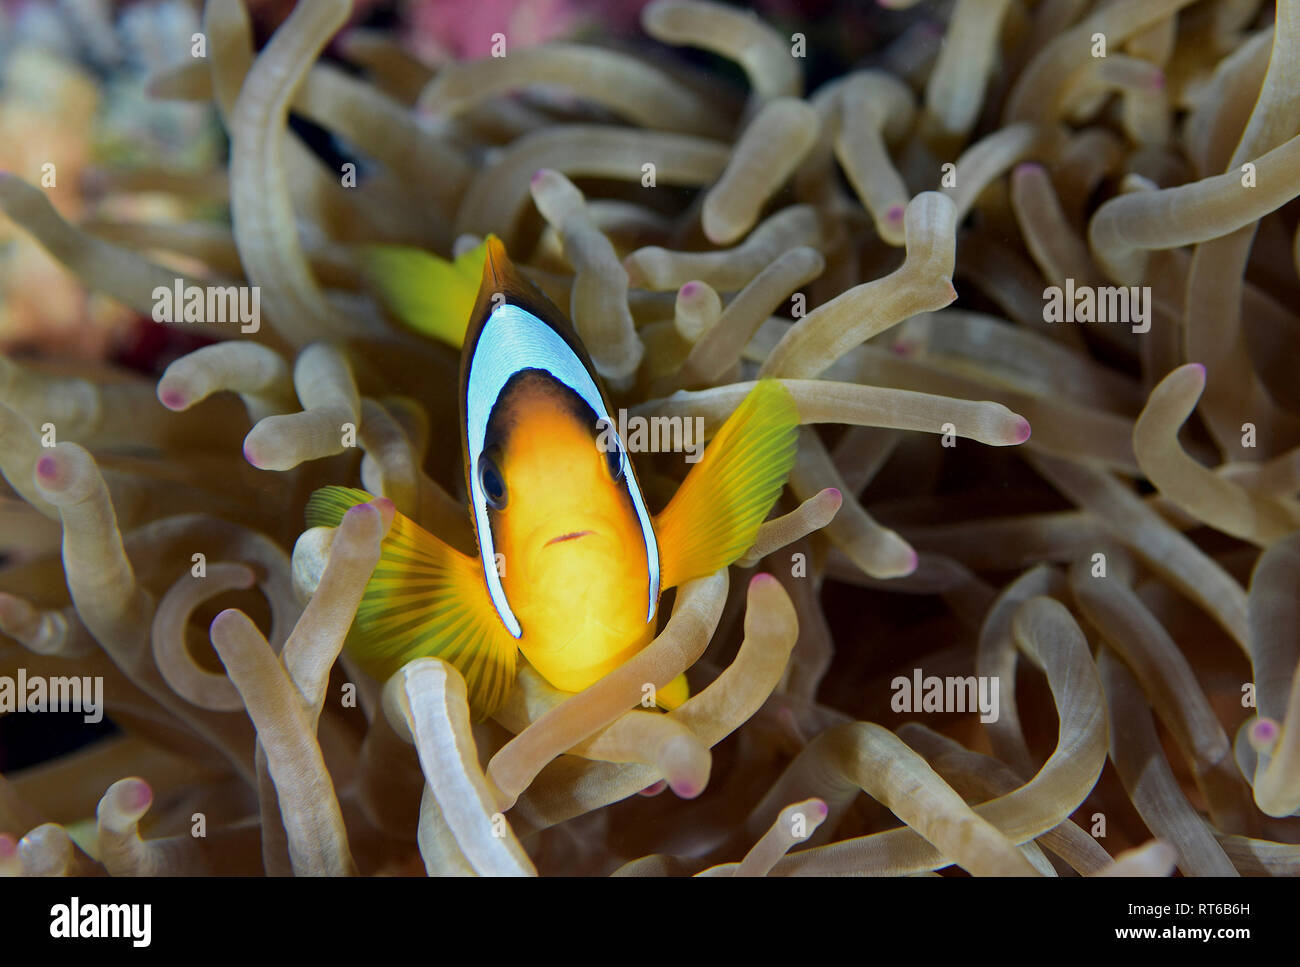 Rotes Meer Clownfisch (Amphiprion bicinctus), Rotes Meer, Ägypten. Stockfoto